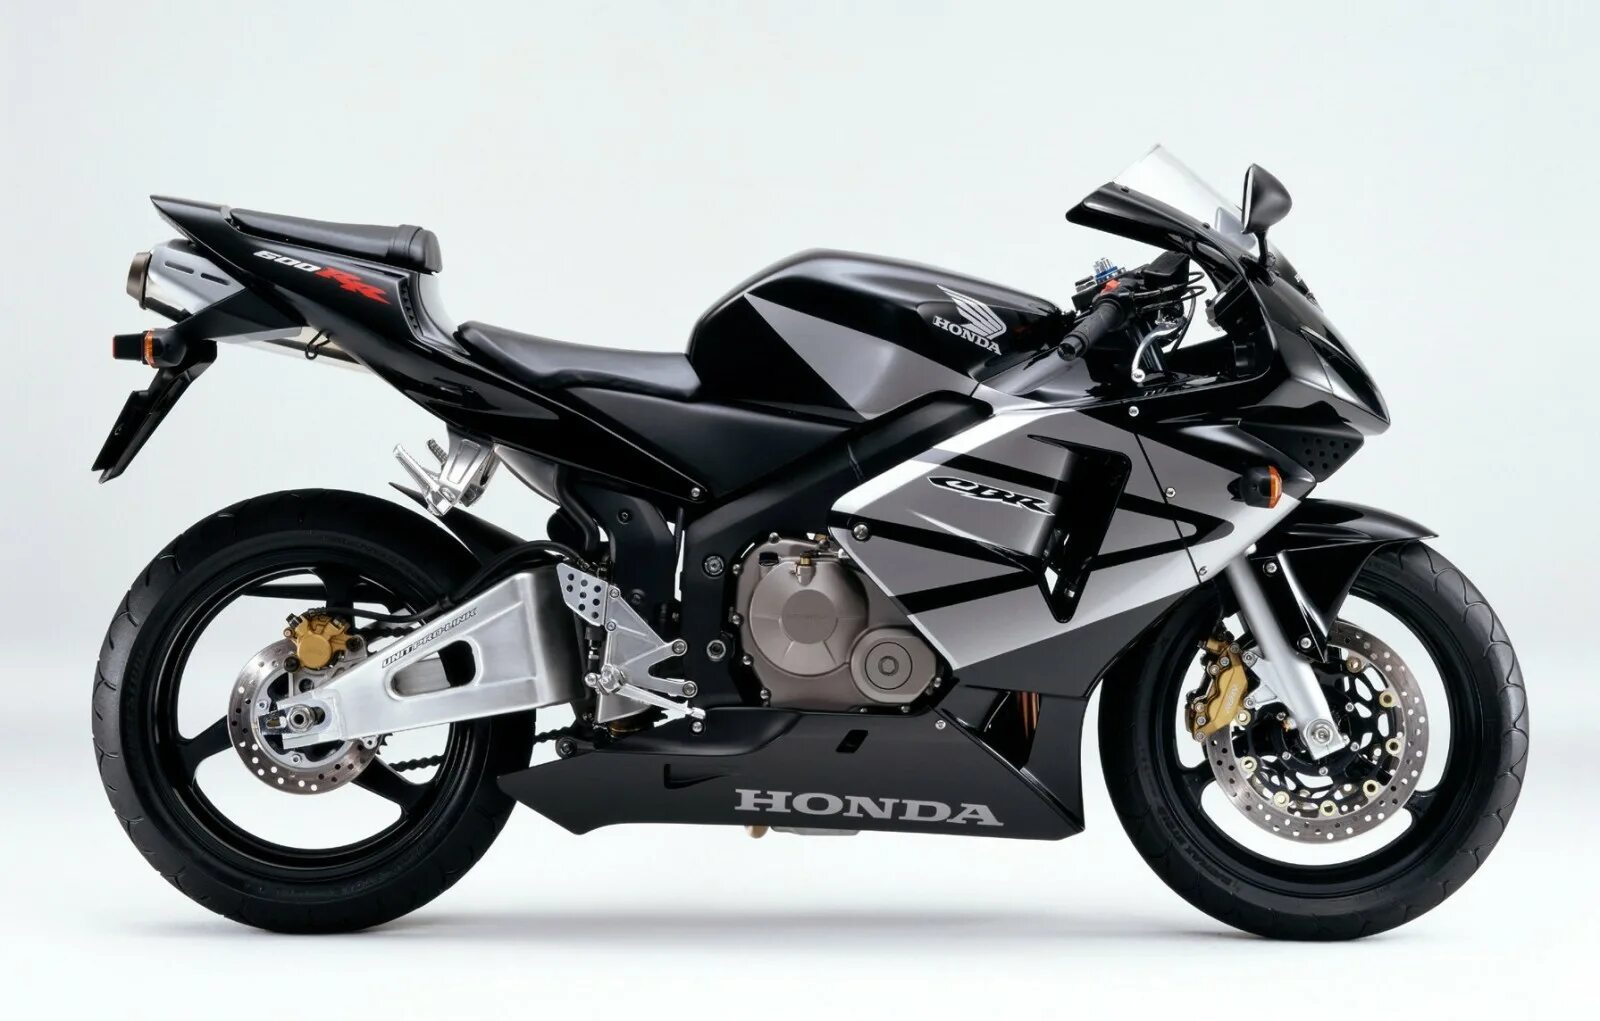 Honda cbr600rr. Мотоцикл Honda CBR 600. Мотоцикл Хонда CBR 600 RR. Honda cbr600rr 2003. Мотоцикл honda rr